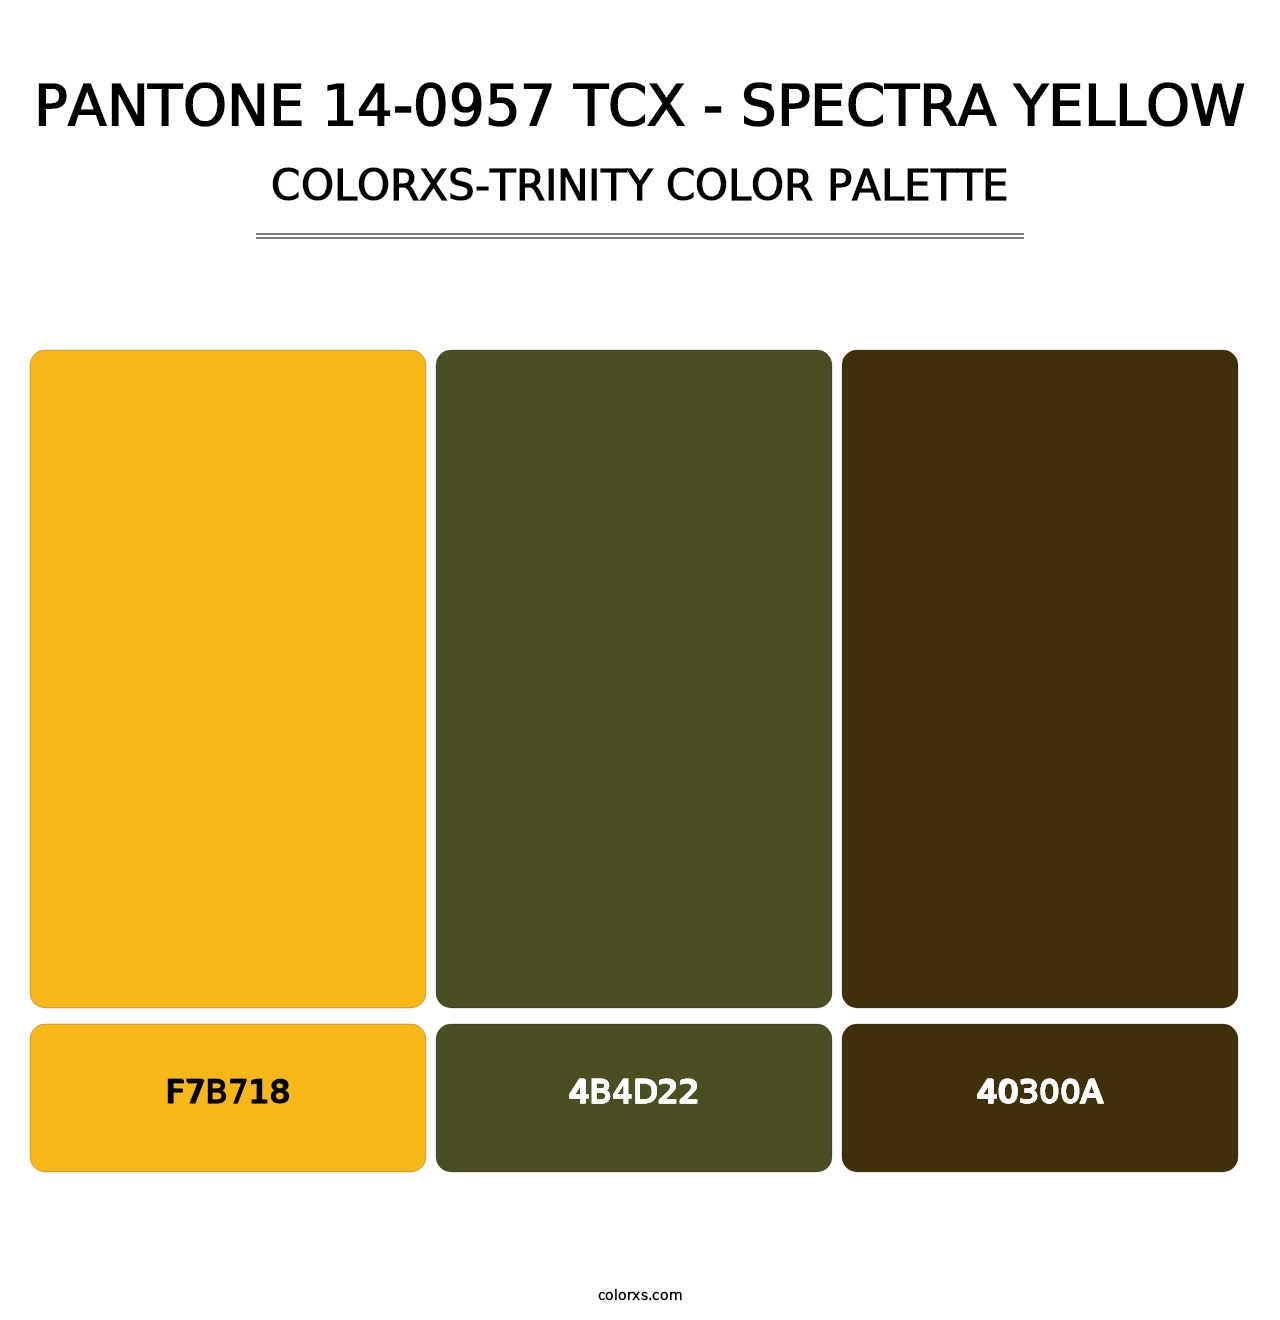 PANTONE 14-0957 TCX - Spectra Yellow - Colorxs Trinity Palette